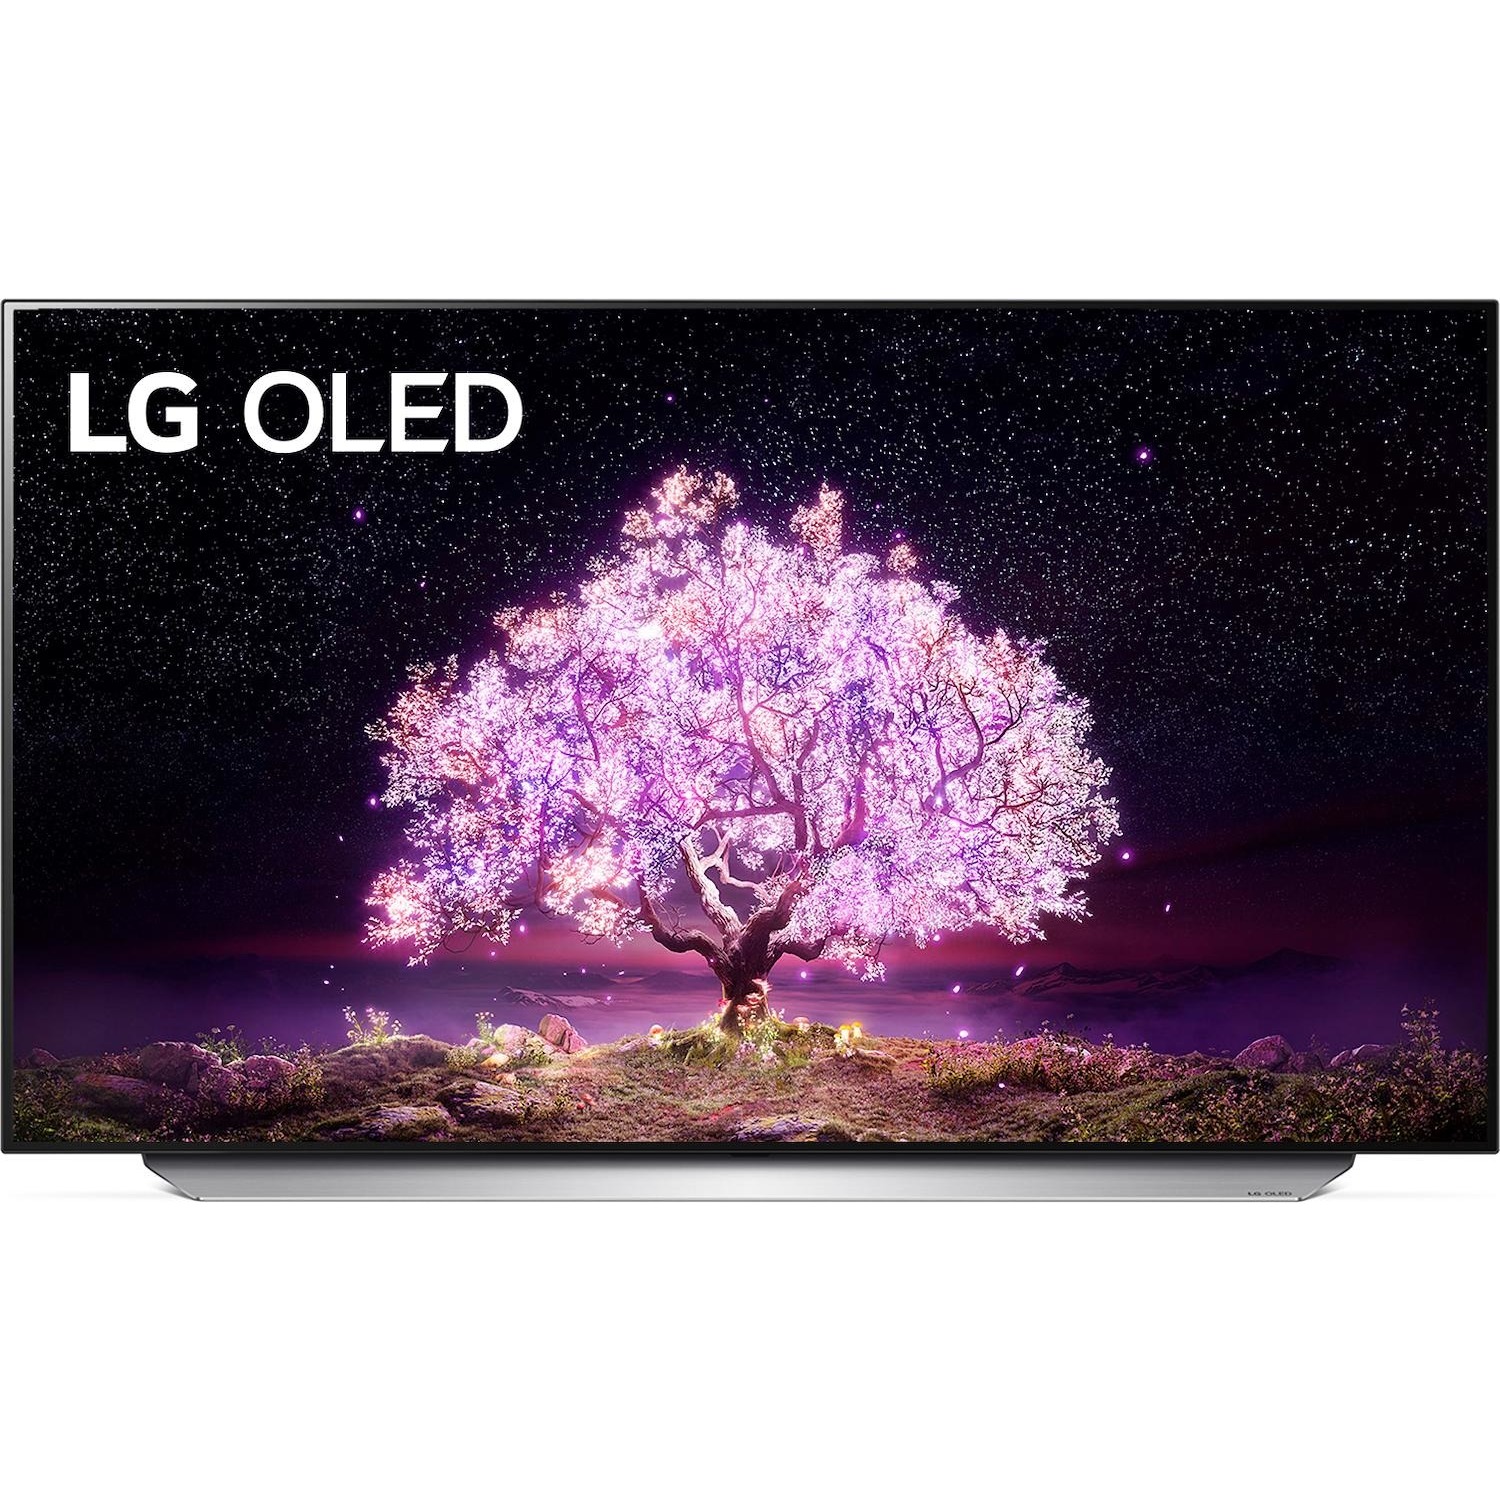 Immagine per TV OLED LG OLED55C16 Calibrato 4K e FULL HD da DIMOStore